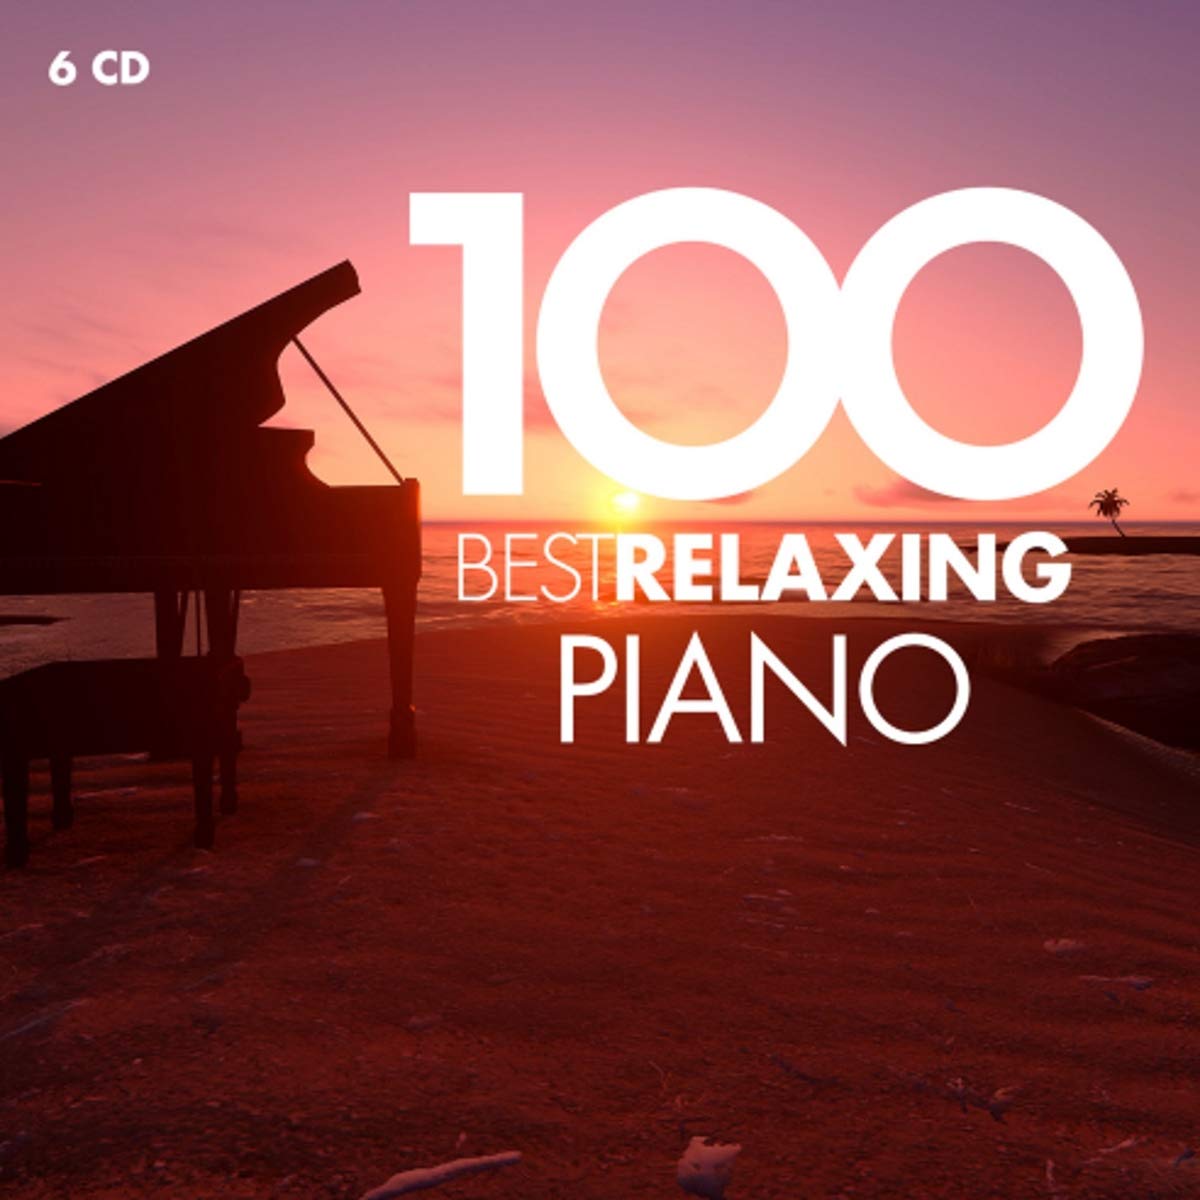 100 Best Relaxing Piano